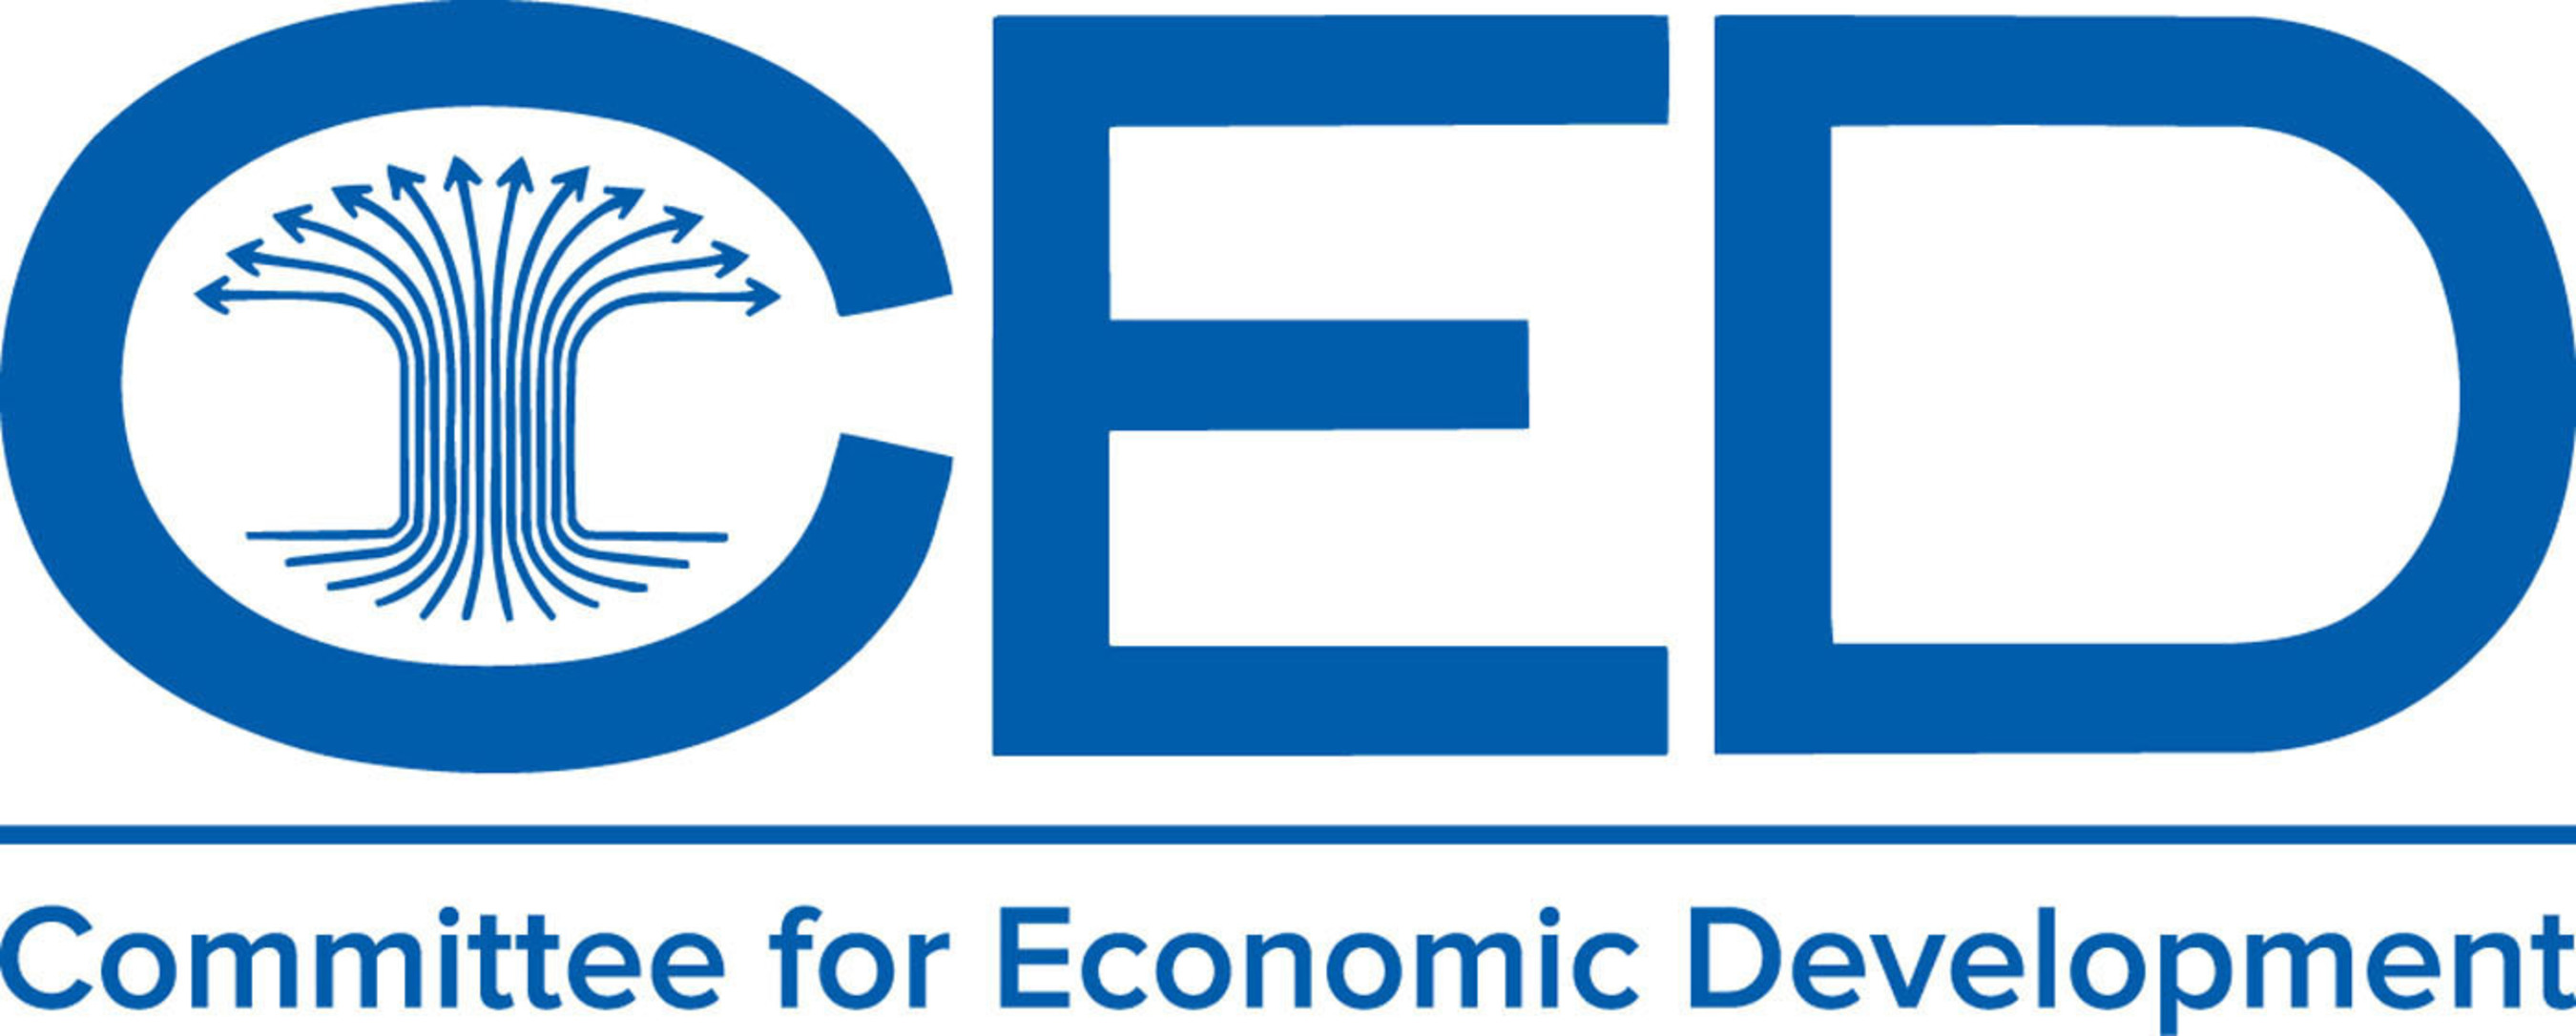 CED logo.